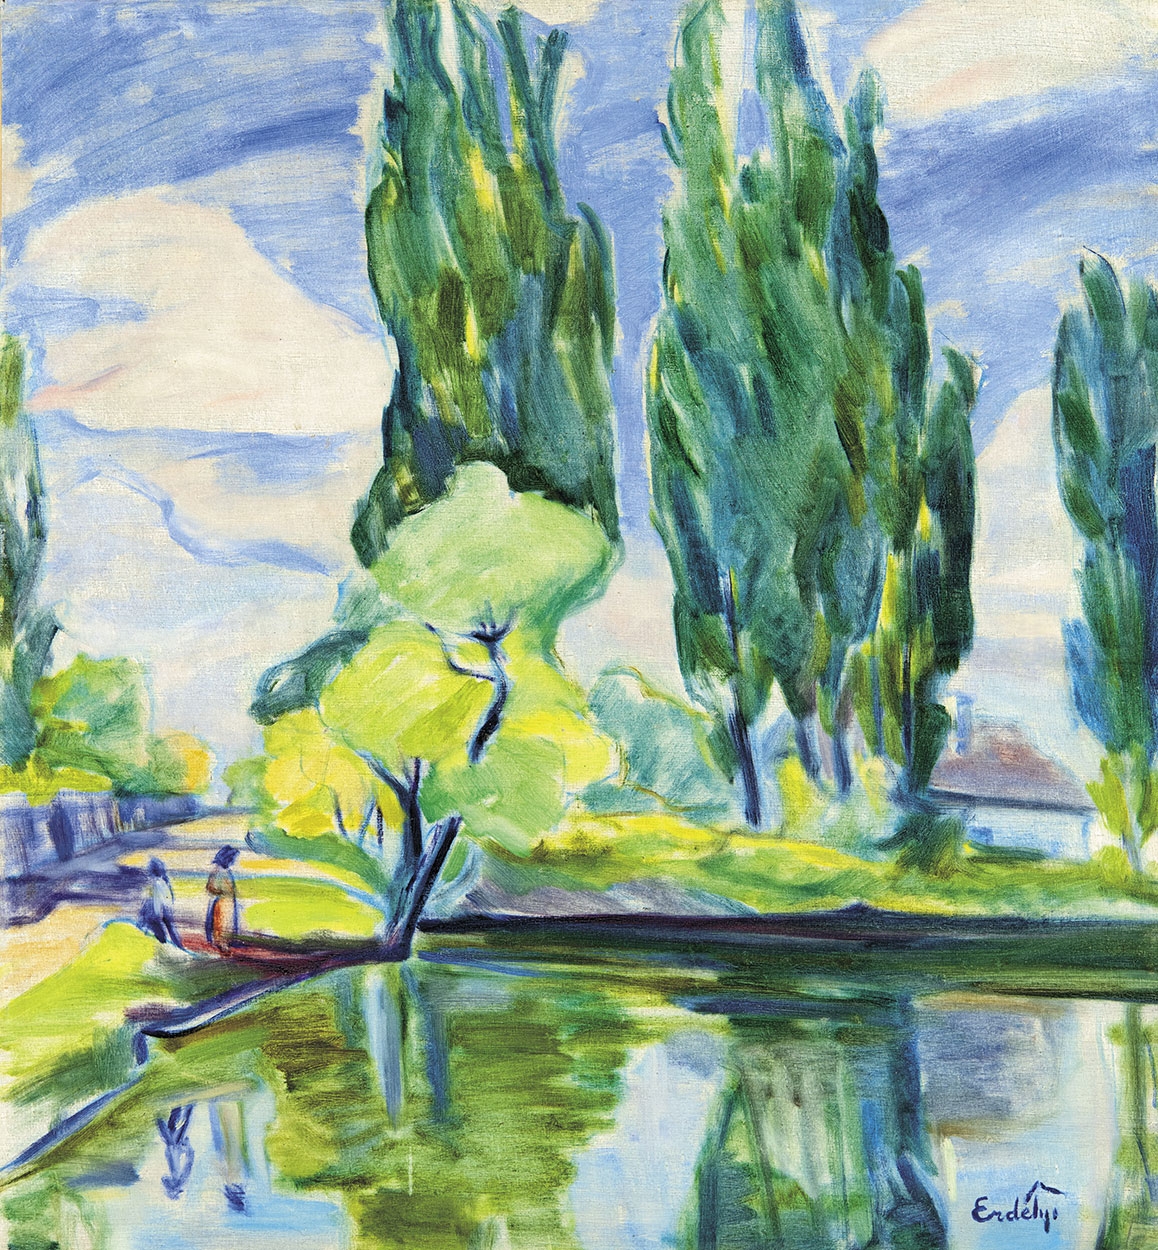 Erdélyi Béla (1891-1955) Waterfront